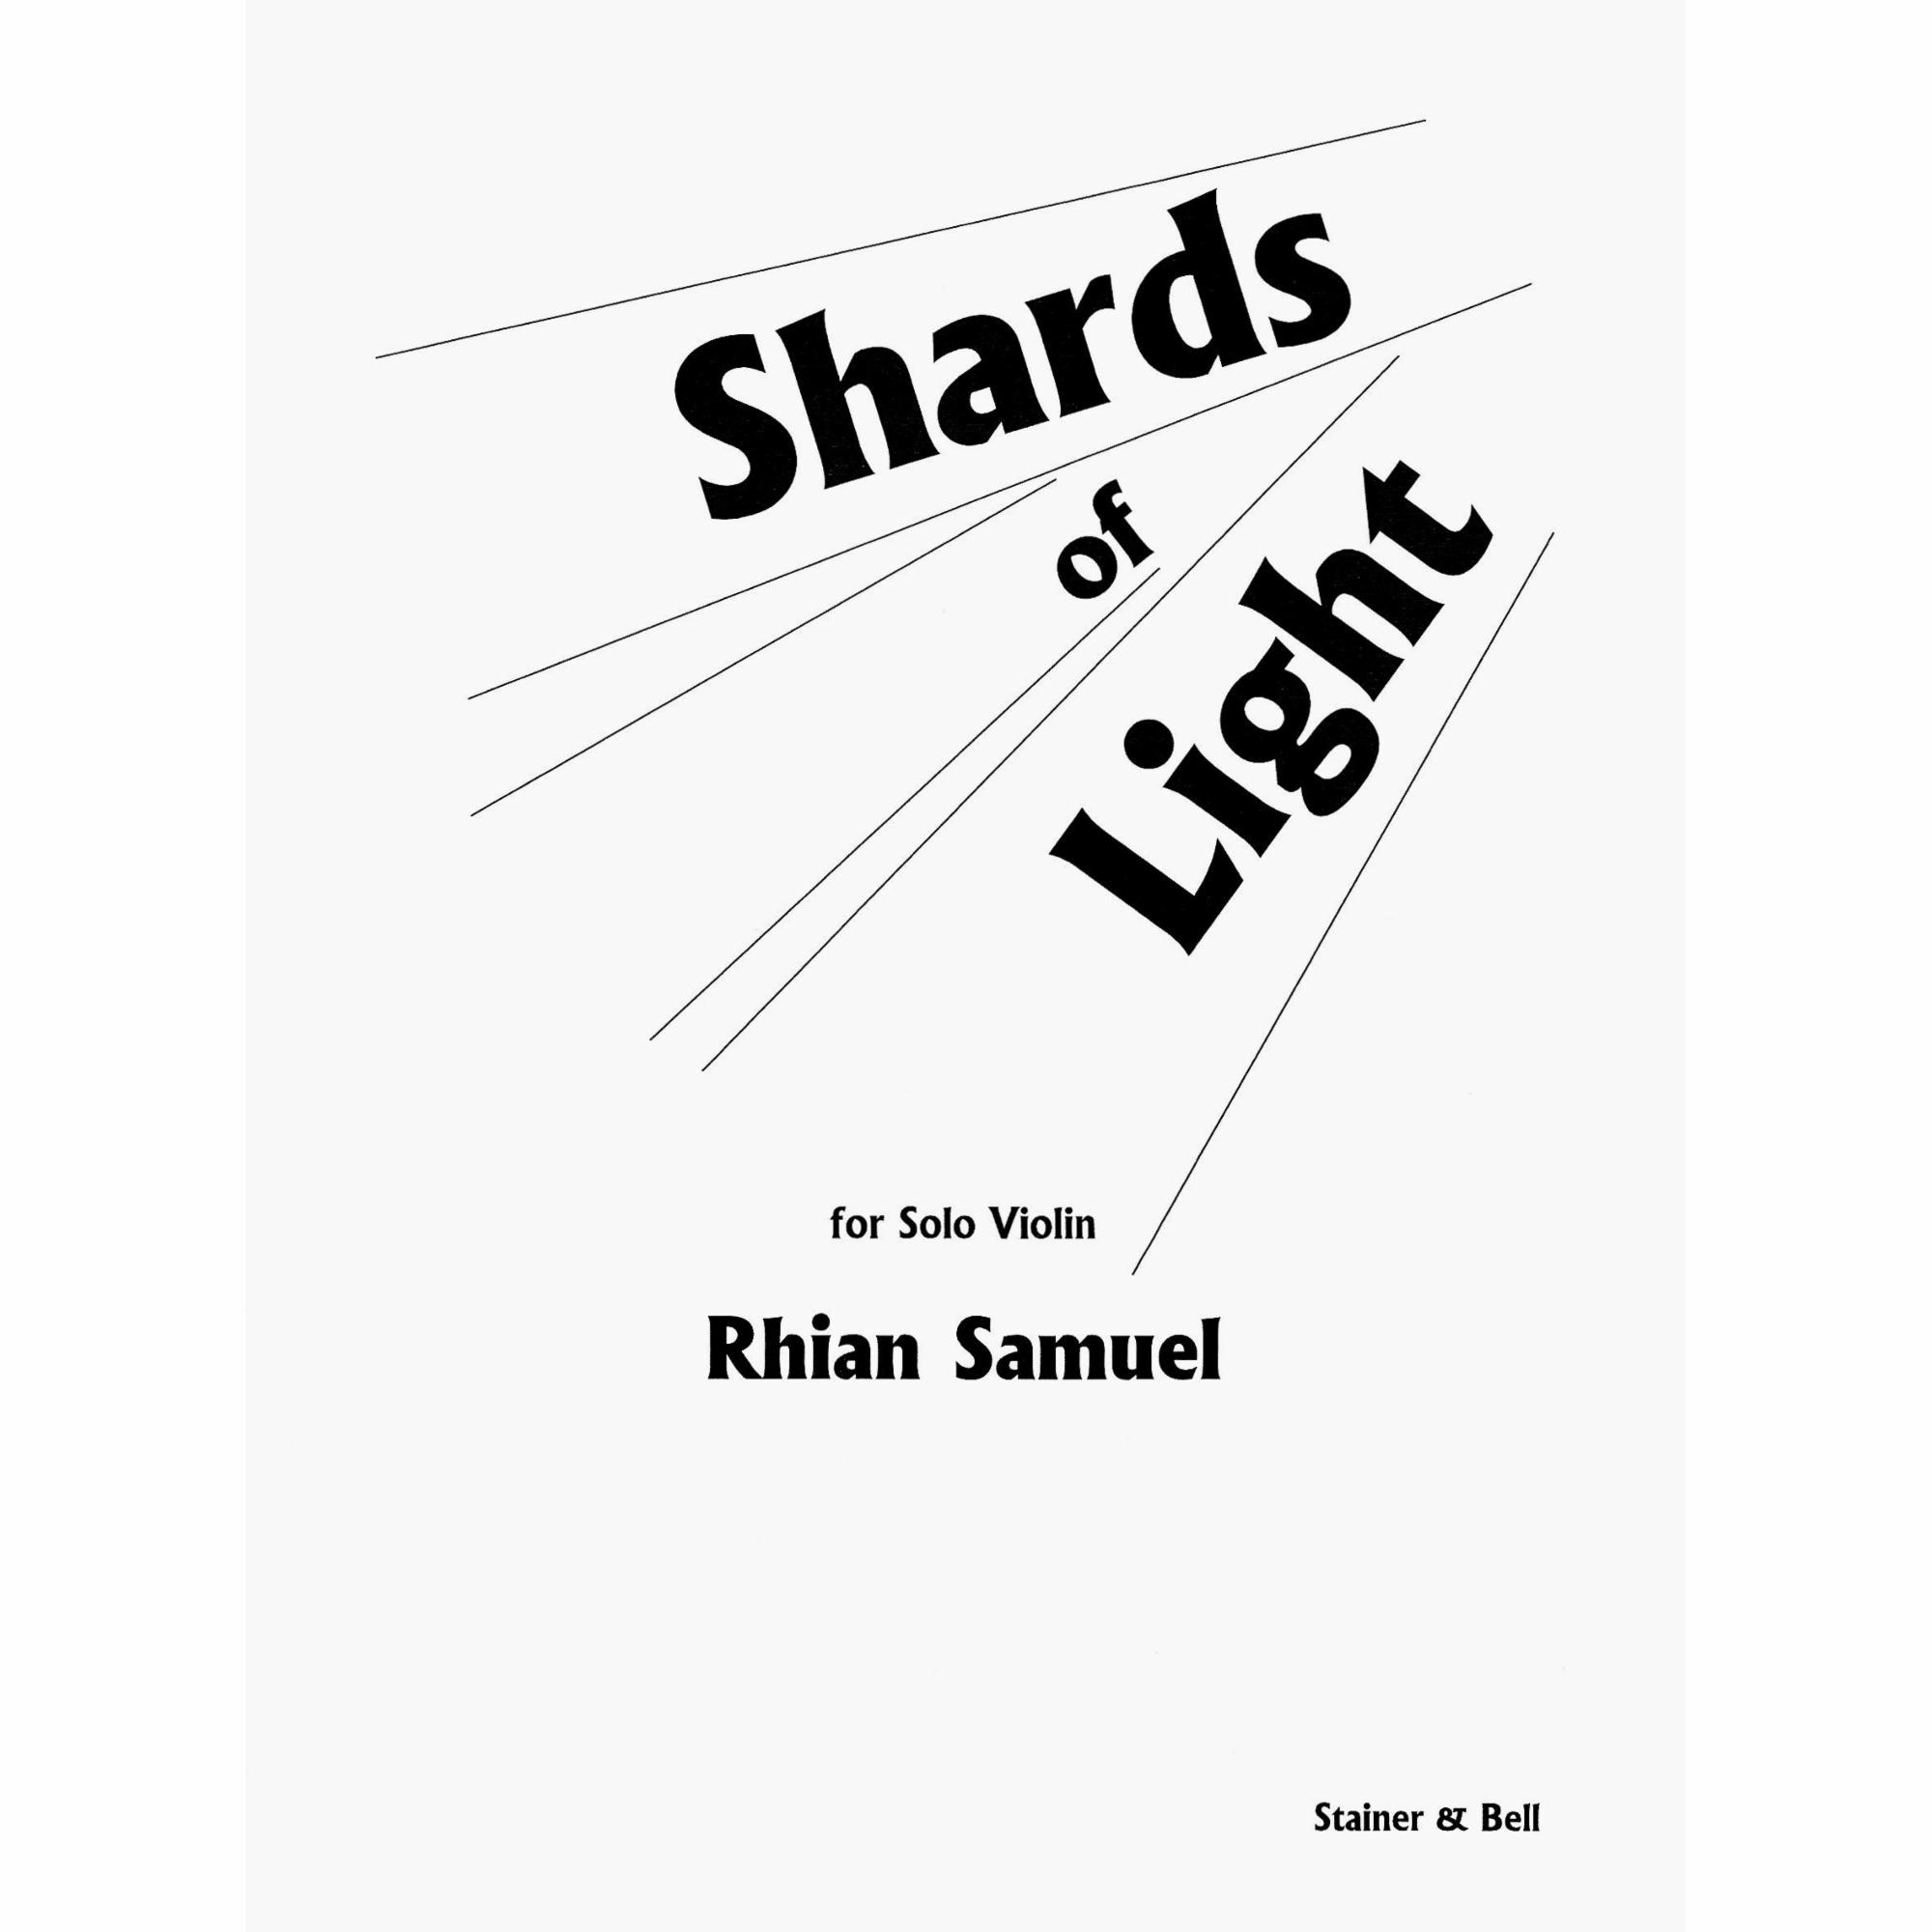 Samuel -- Shards of Light for Solo Violin